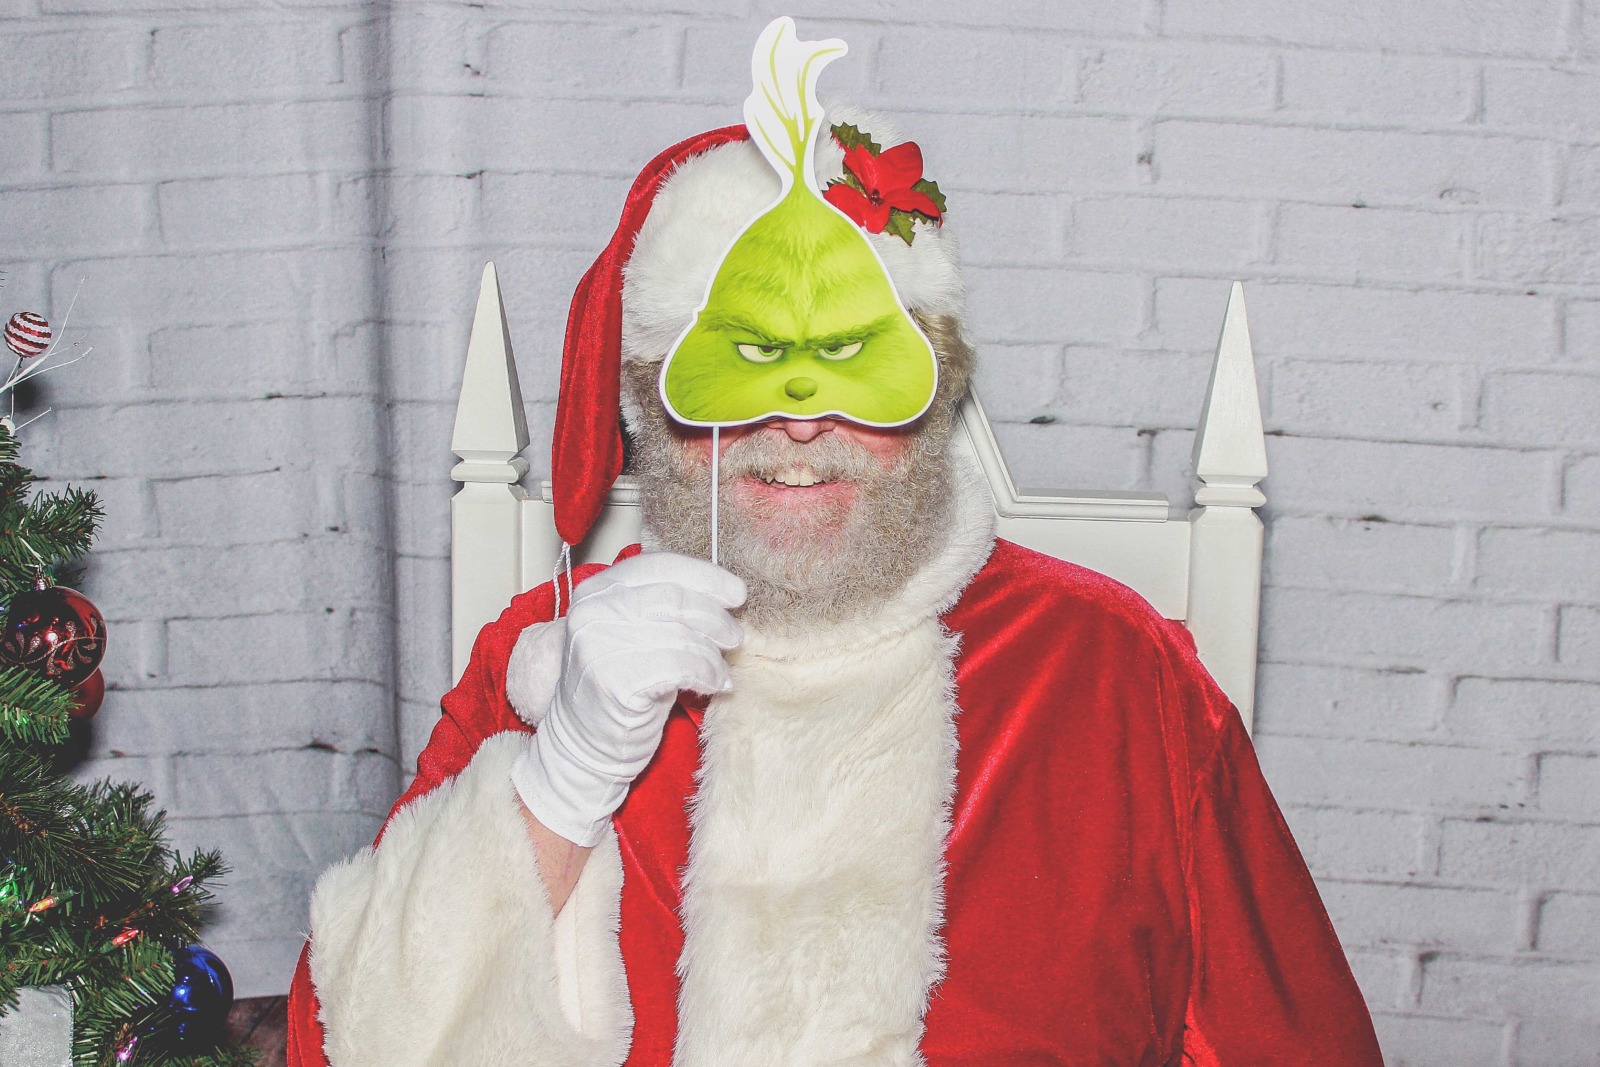 Santa Claus or the Grinch? Photo by mattbannister via Twenty20